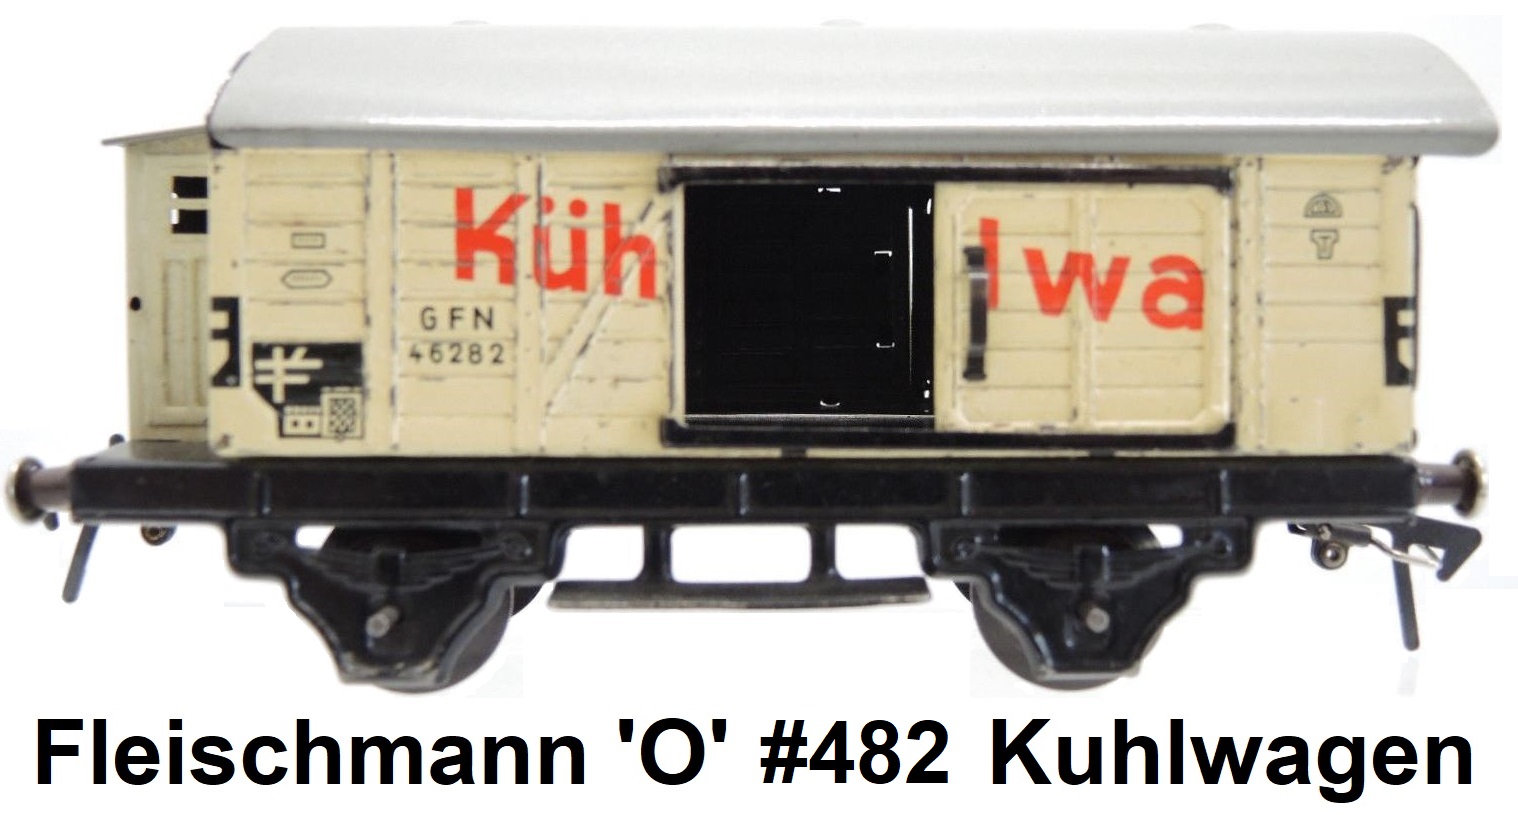 Fleischmann 'O' gauge 4-wheeled tinplate #482 Kuhlwagen (refrigerator) Car With Brakeman's Cabin GFN #46282